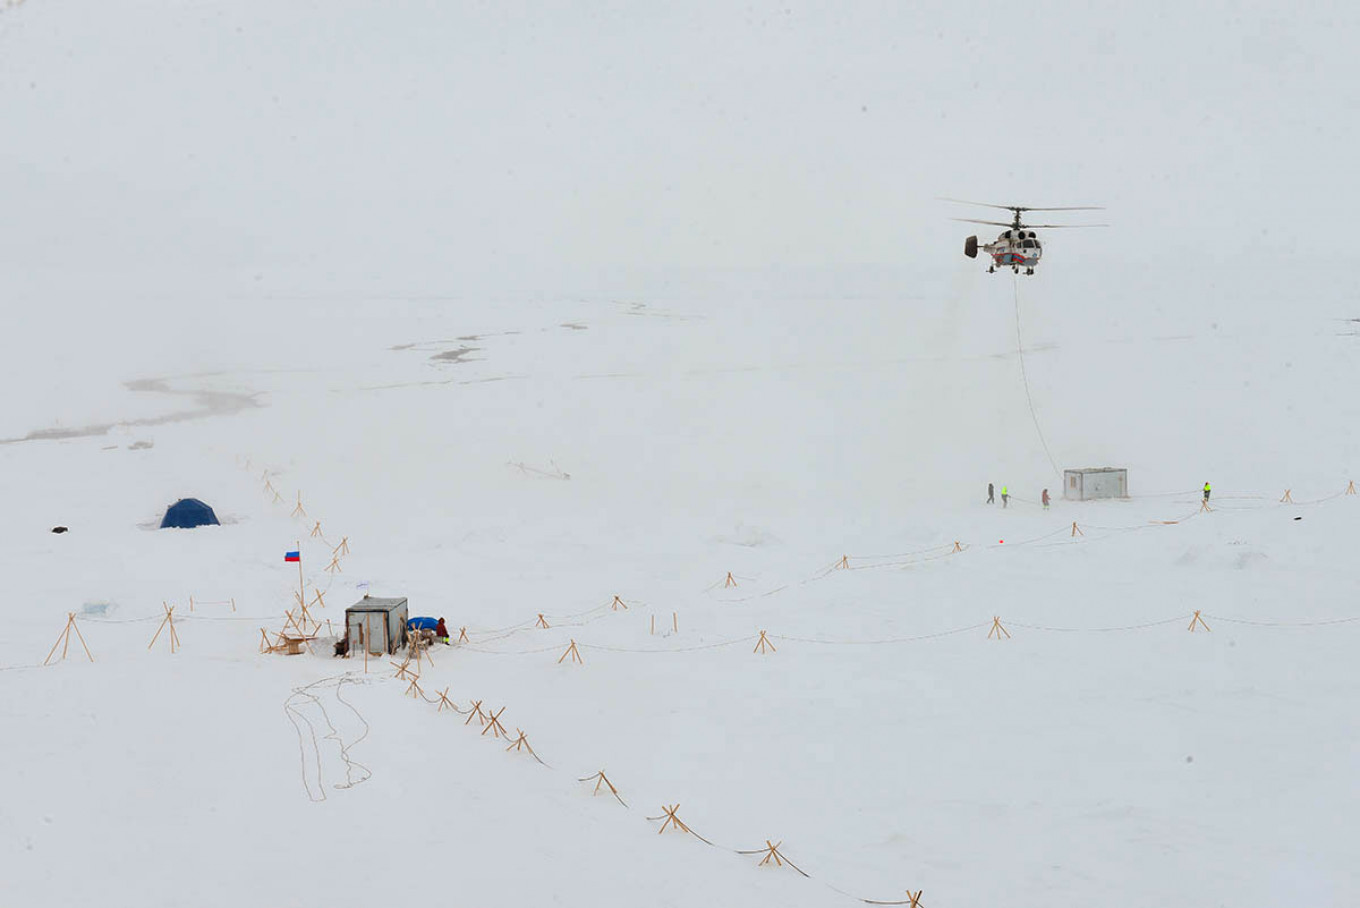 
					A helicoptered evacuated people and equipment.					 					aari.ru				